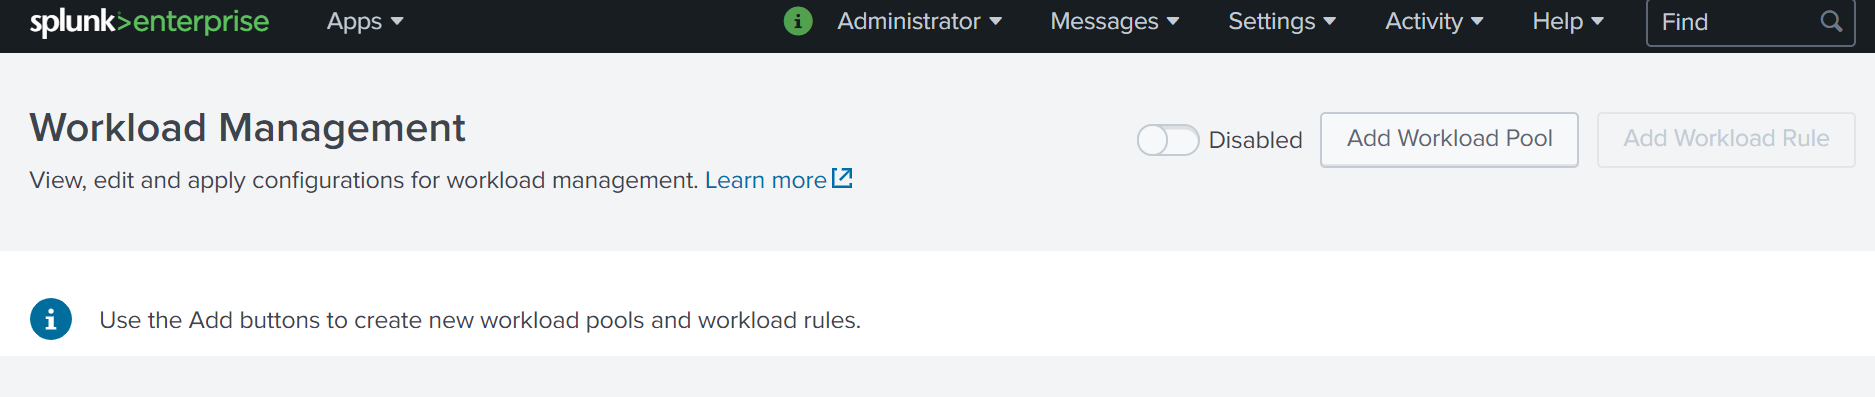 splunk workload management screenshot